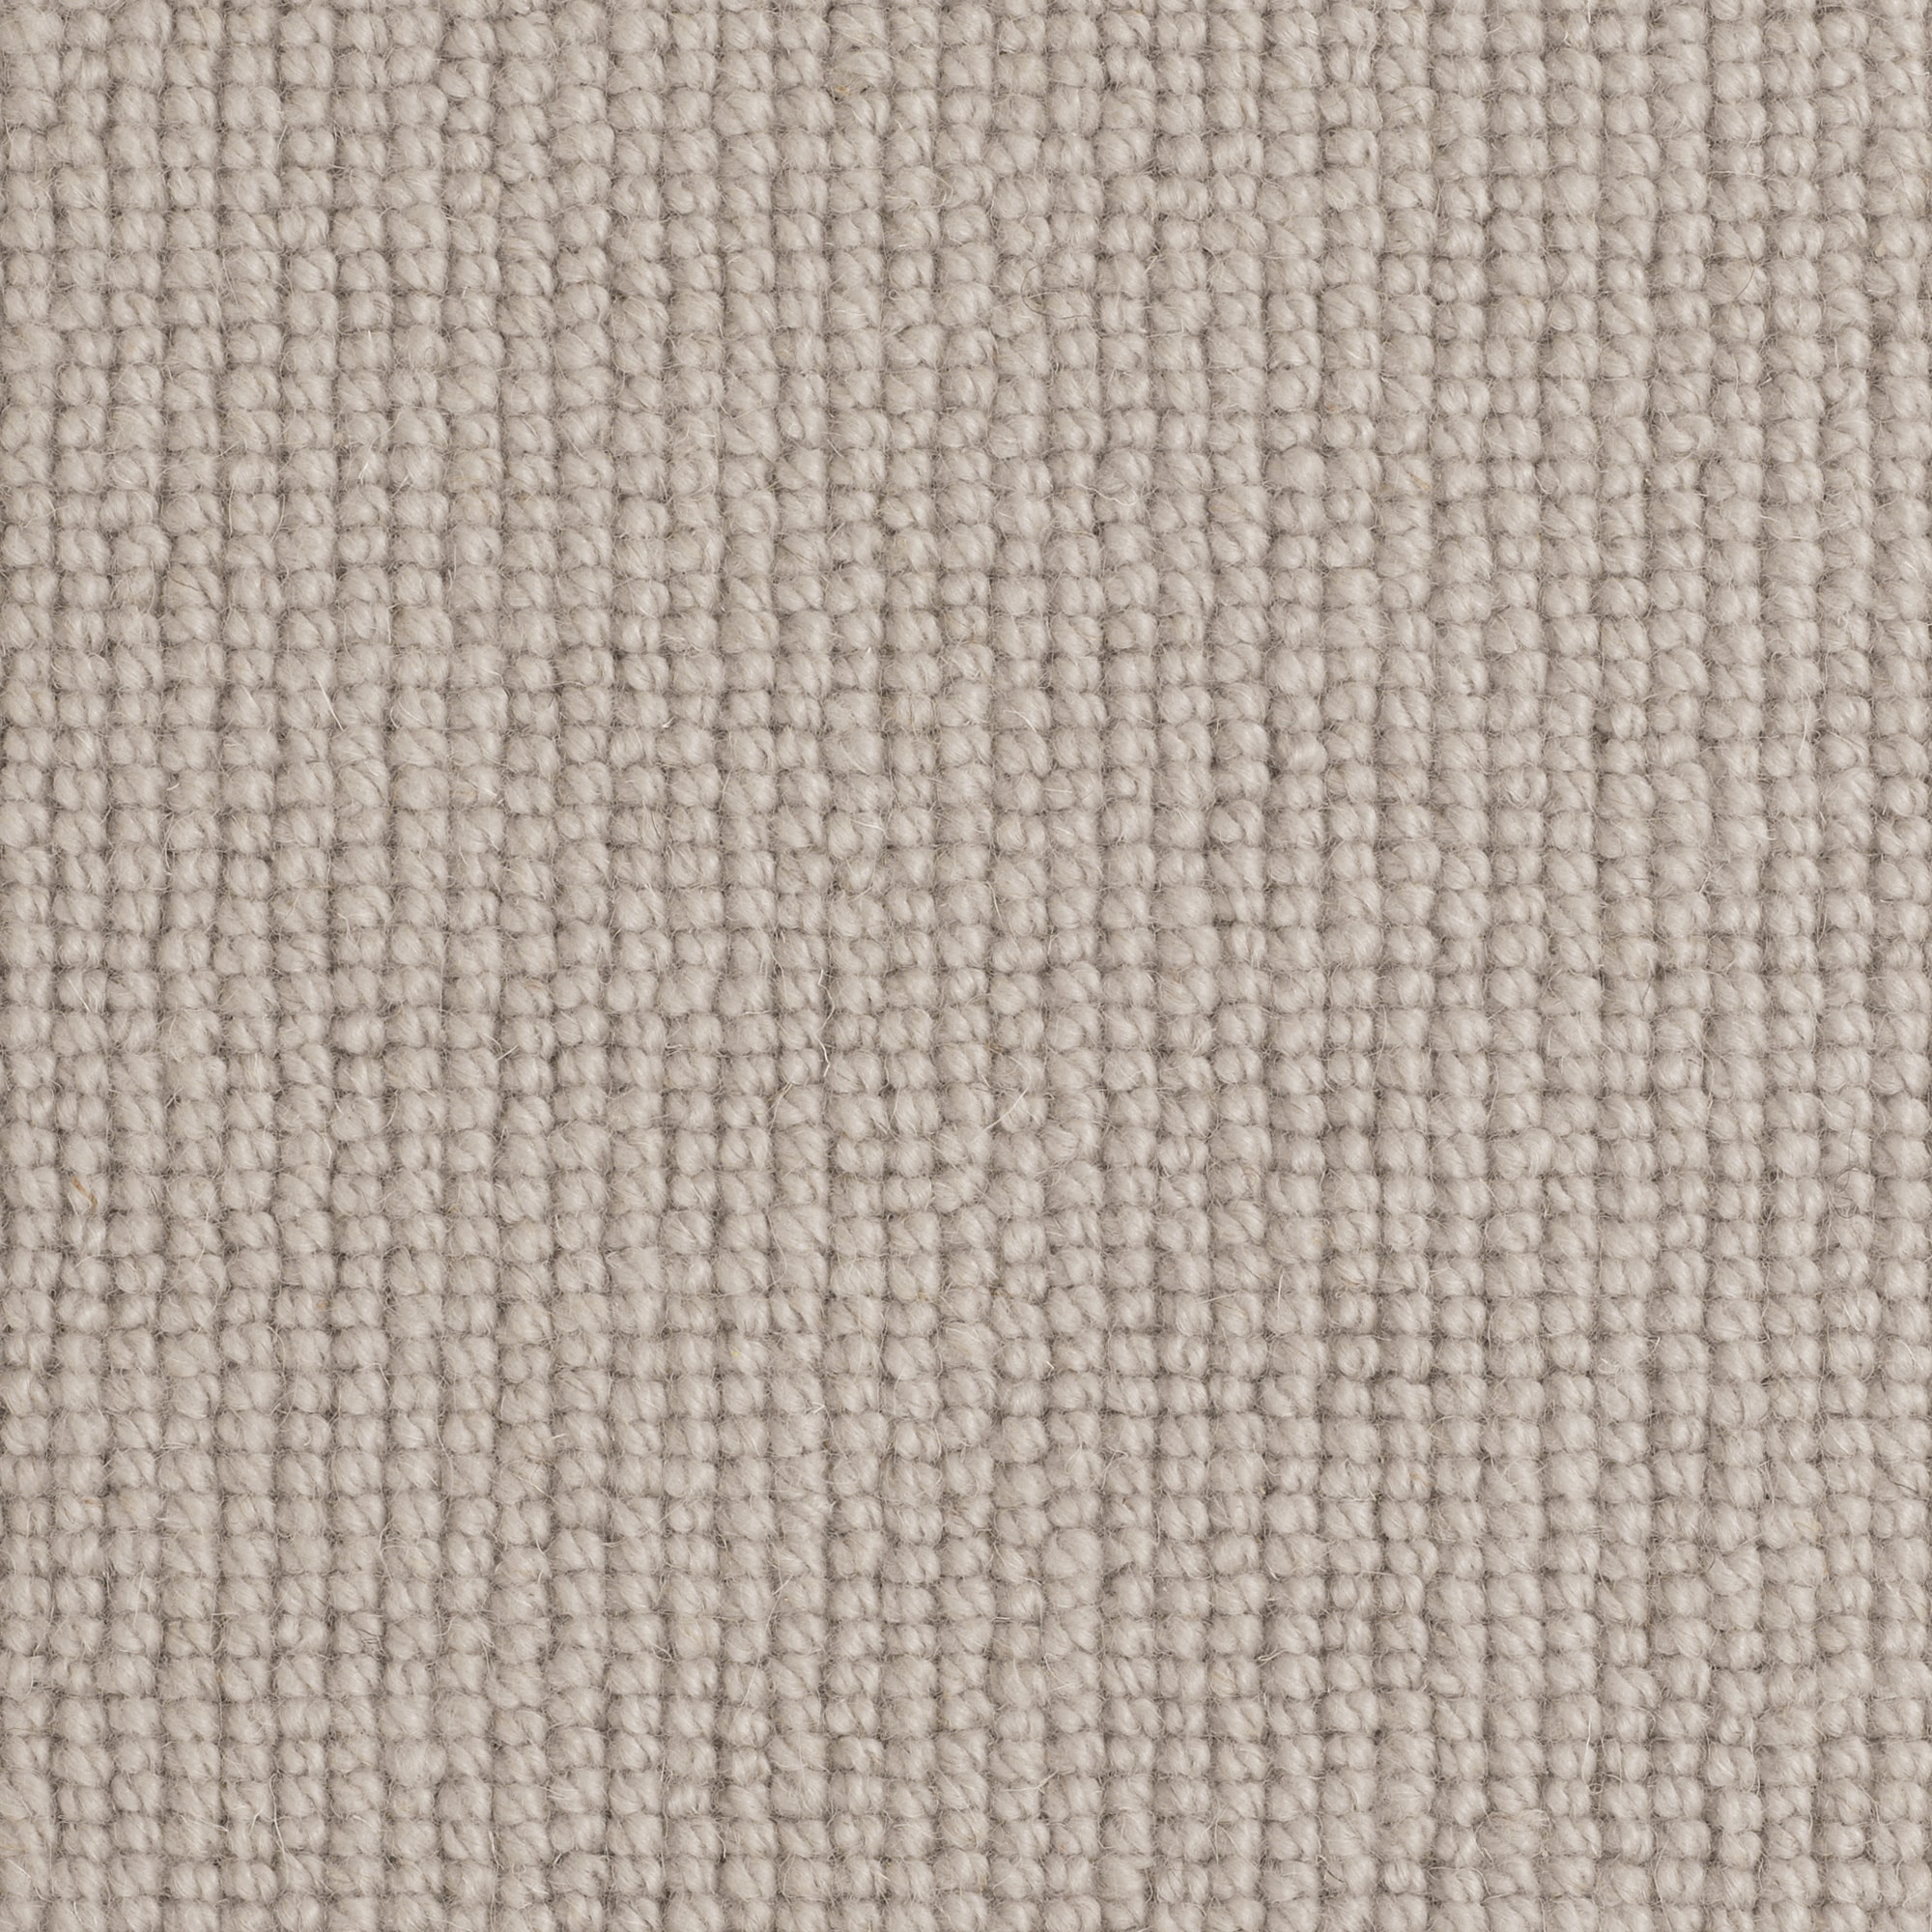 Snowdon: Vellum - 100% Wool Carpet